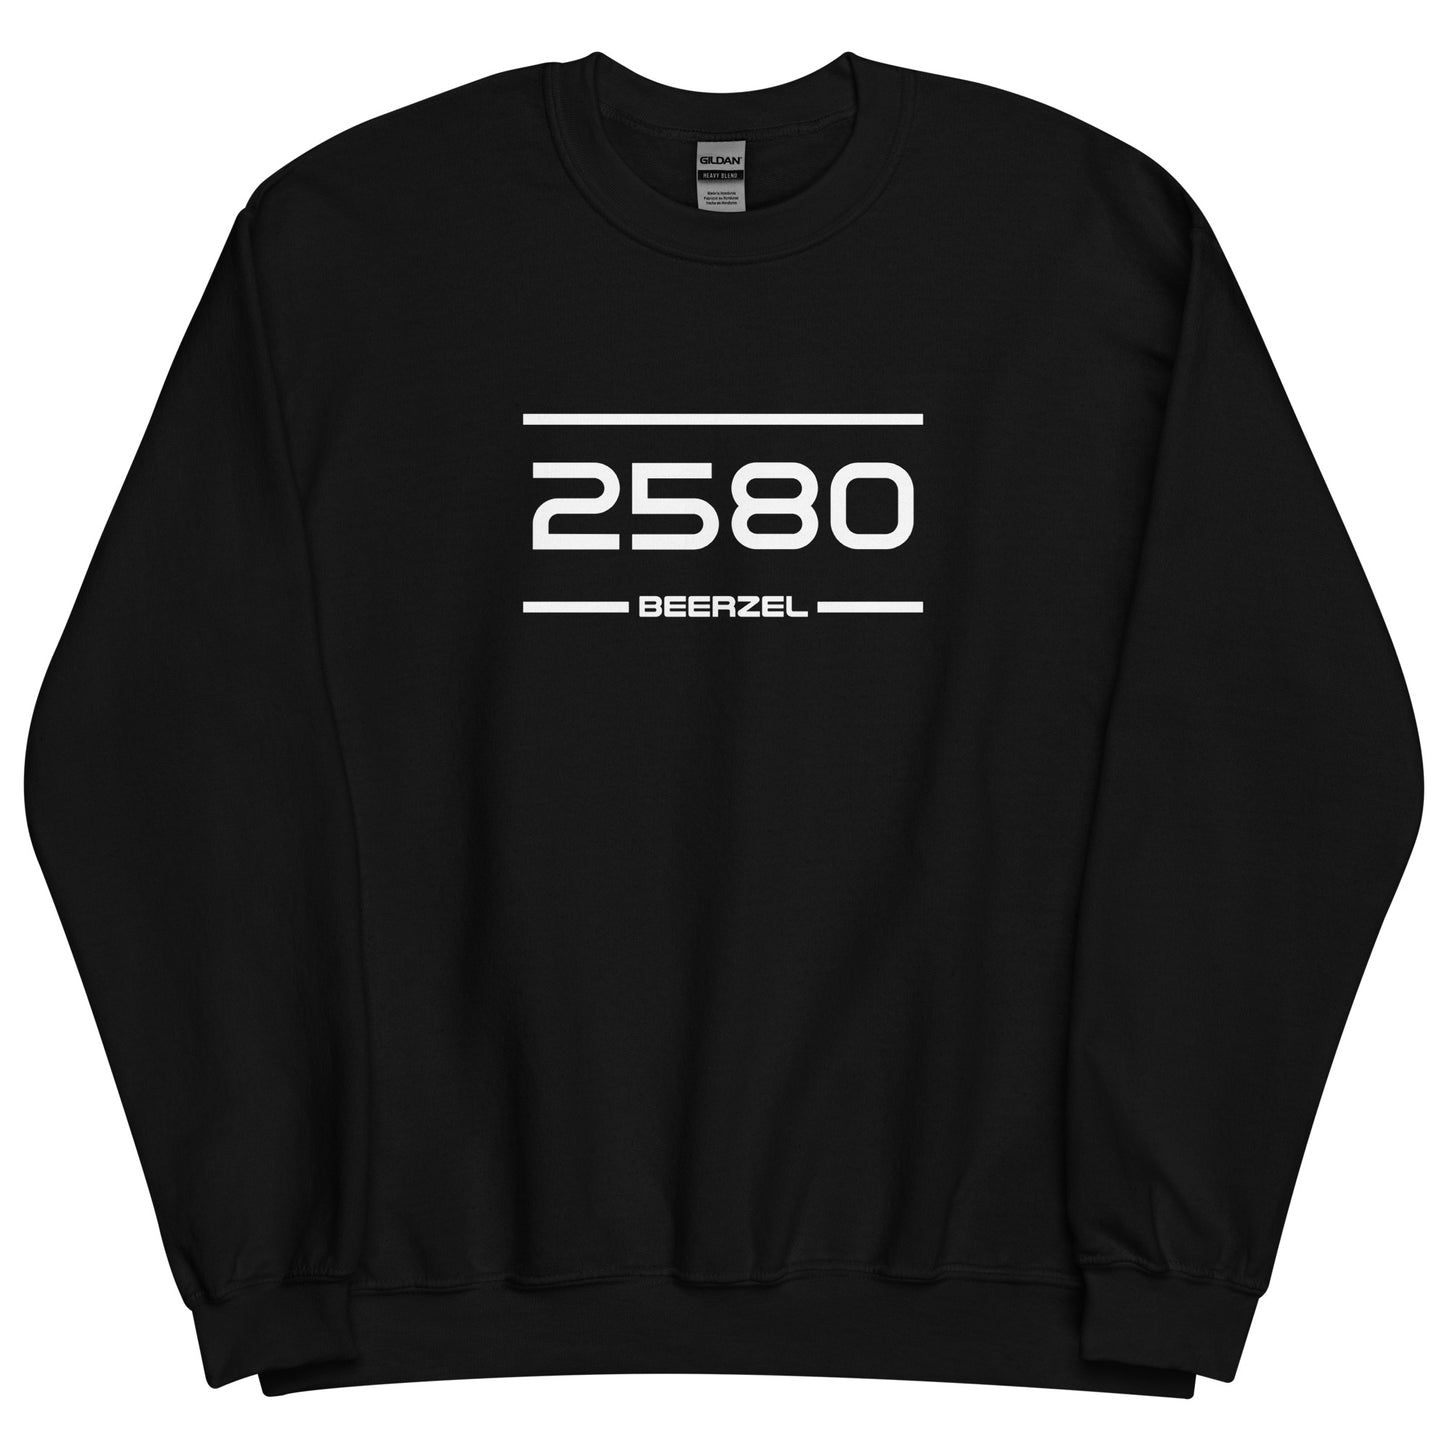 Sweater - 2580 - Beerzel (M/V)